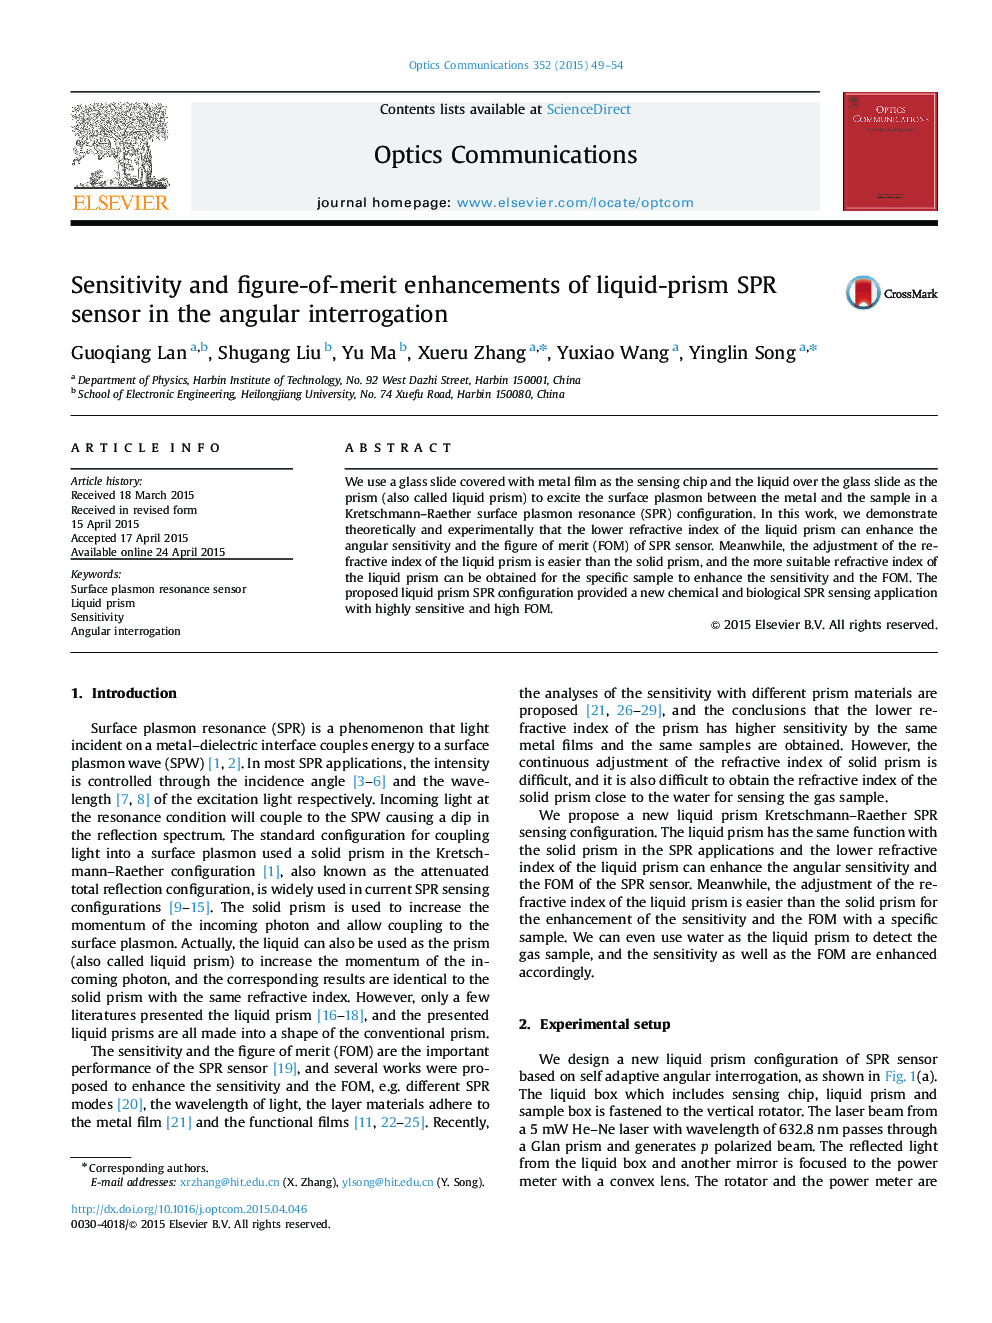 Sensitivity and figure-of-merit enhancements of liquid-prism SPR sensor in the angular interrogation